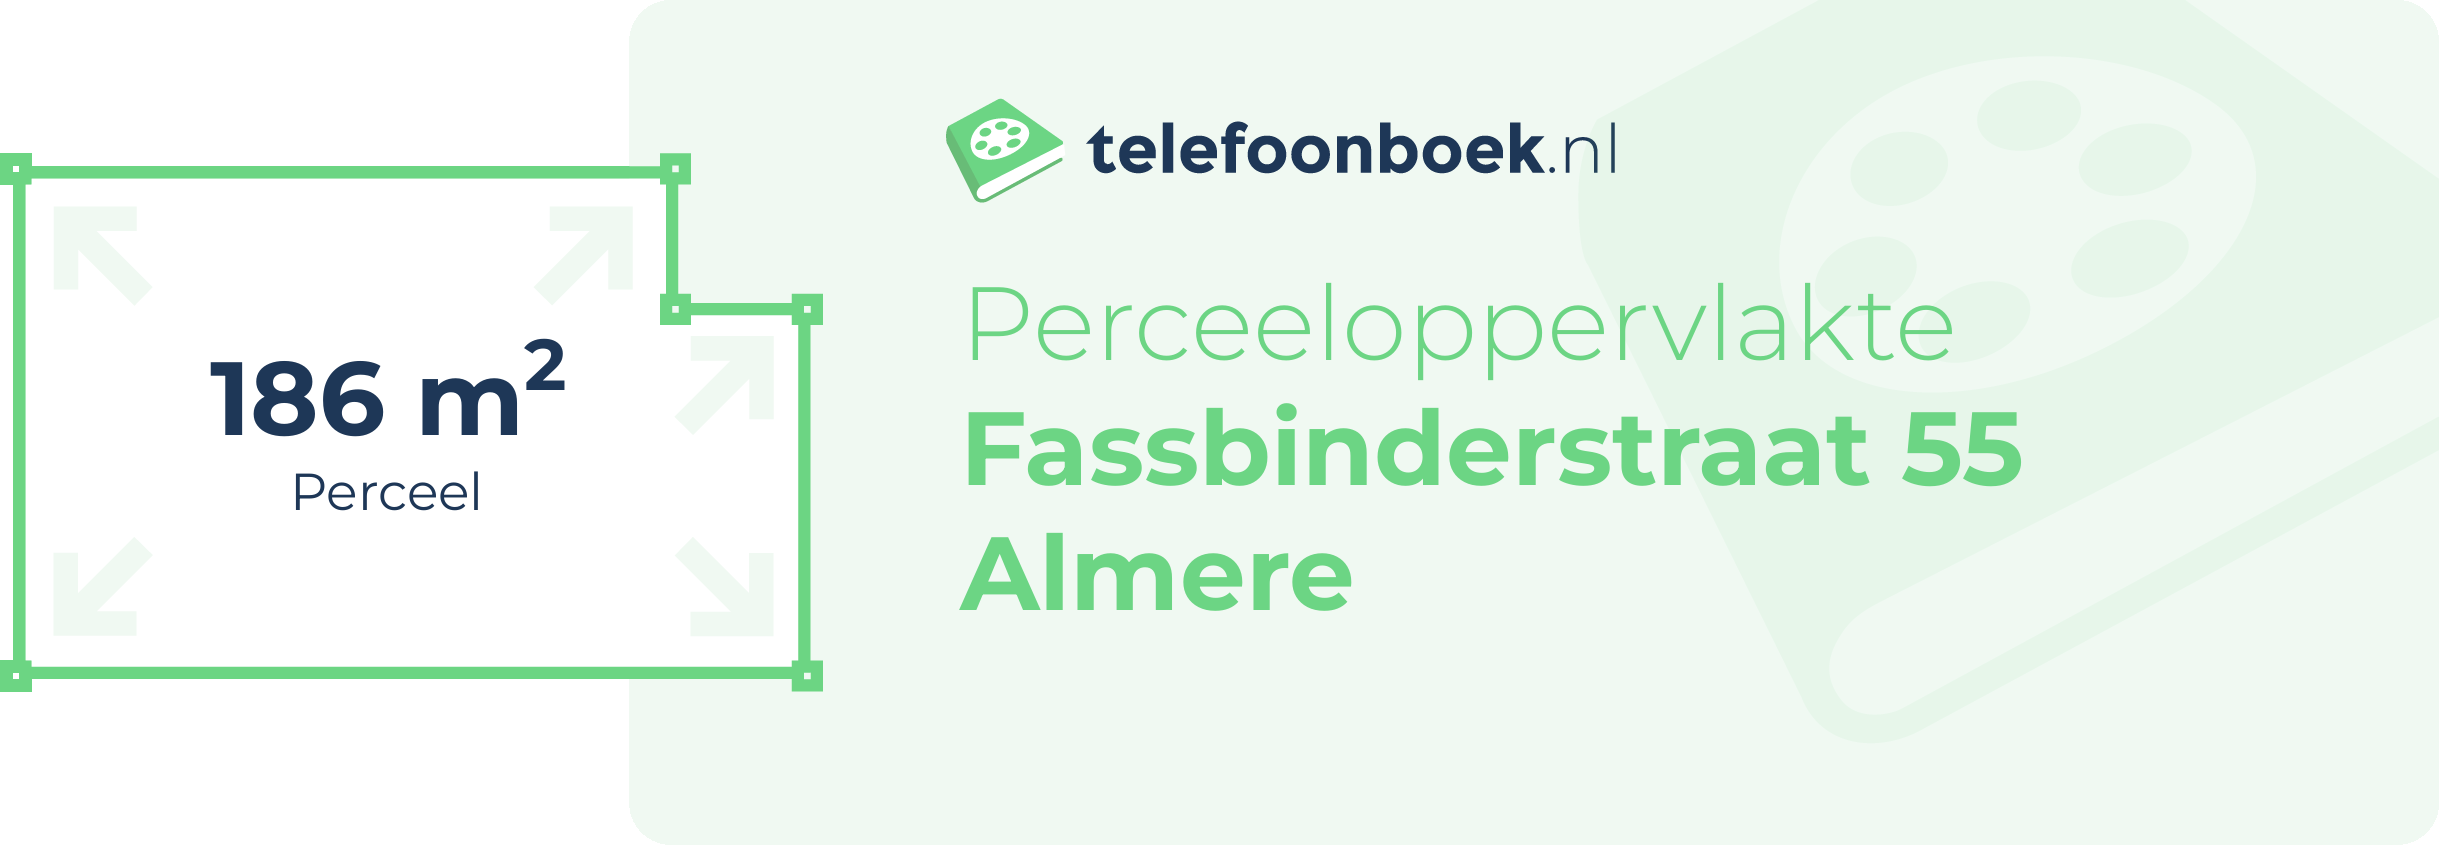 Perceeloppervlakte Fassbinderstraat 55 Almere